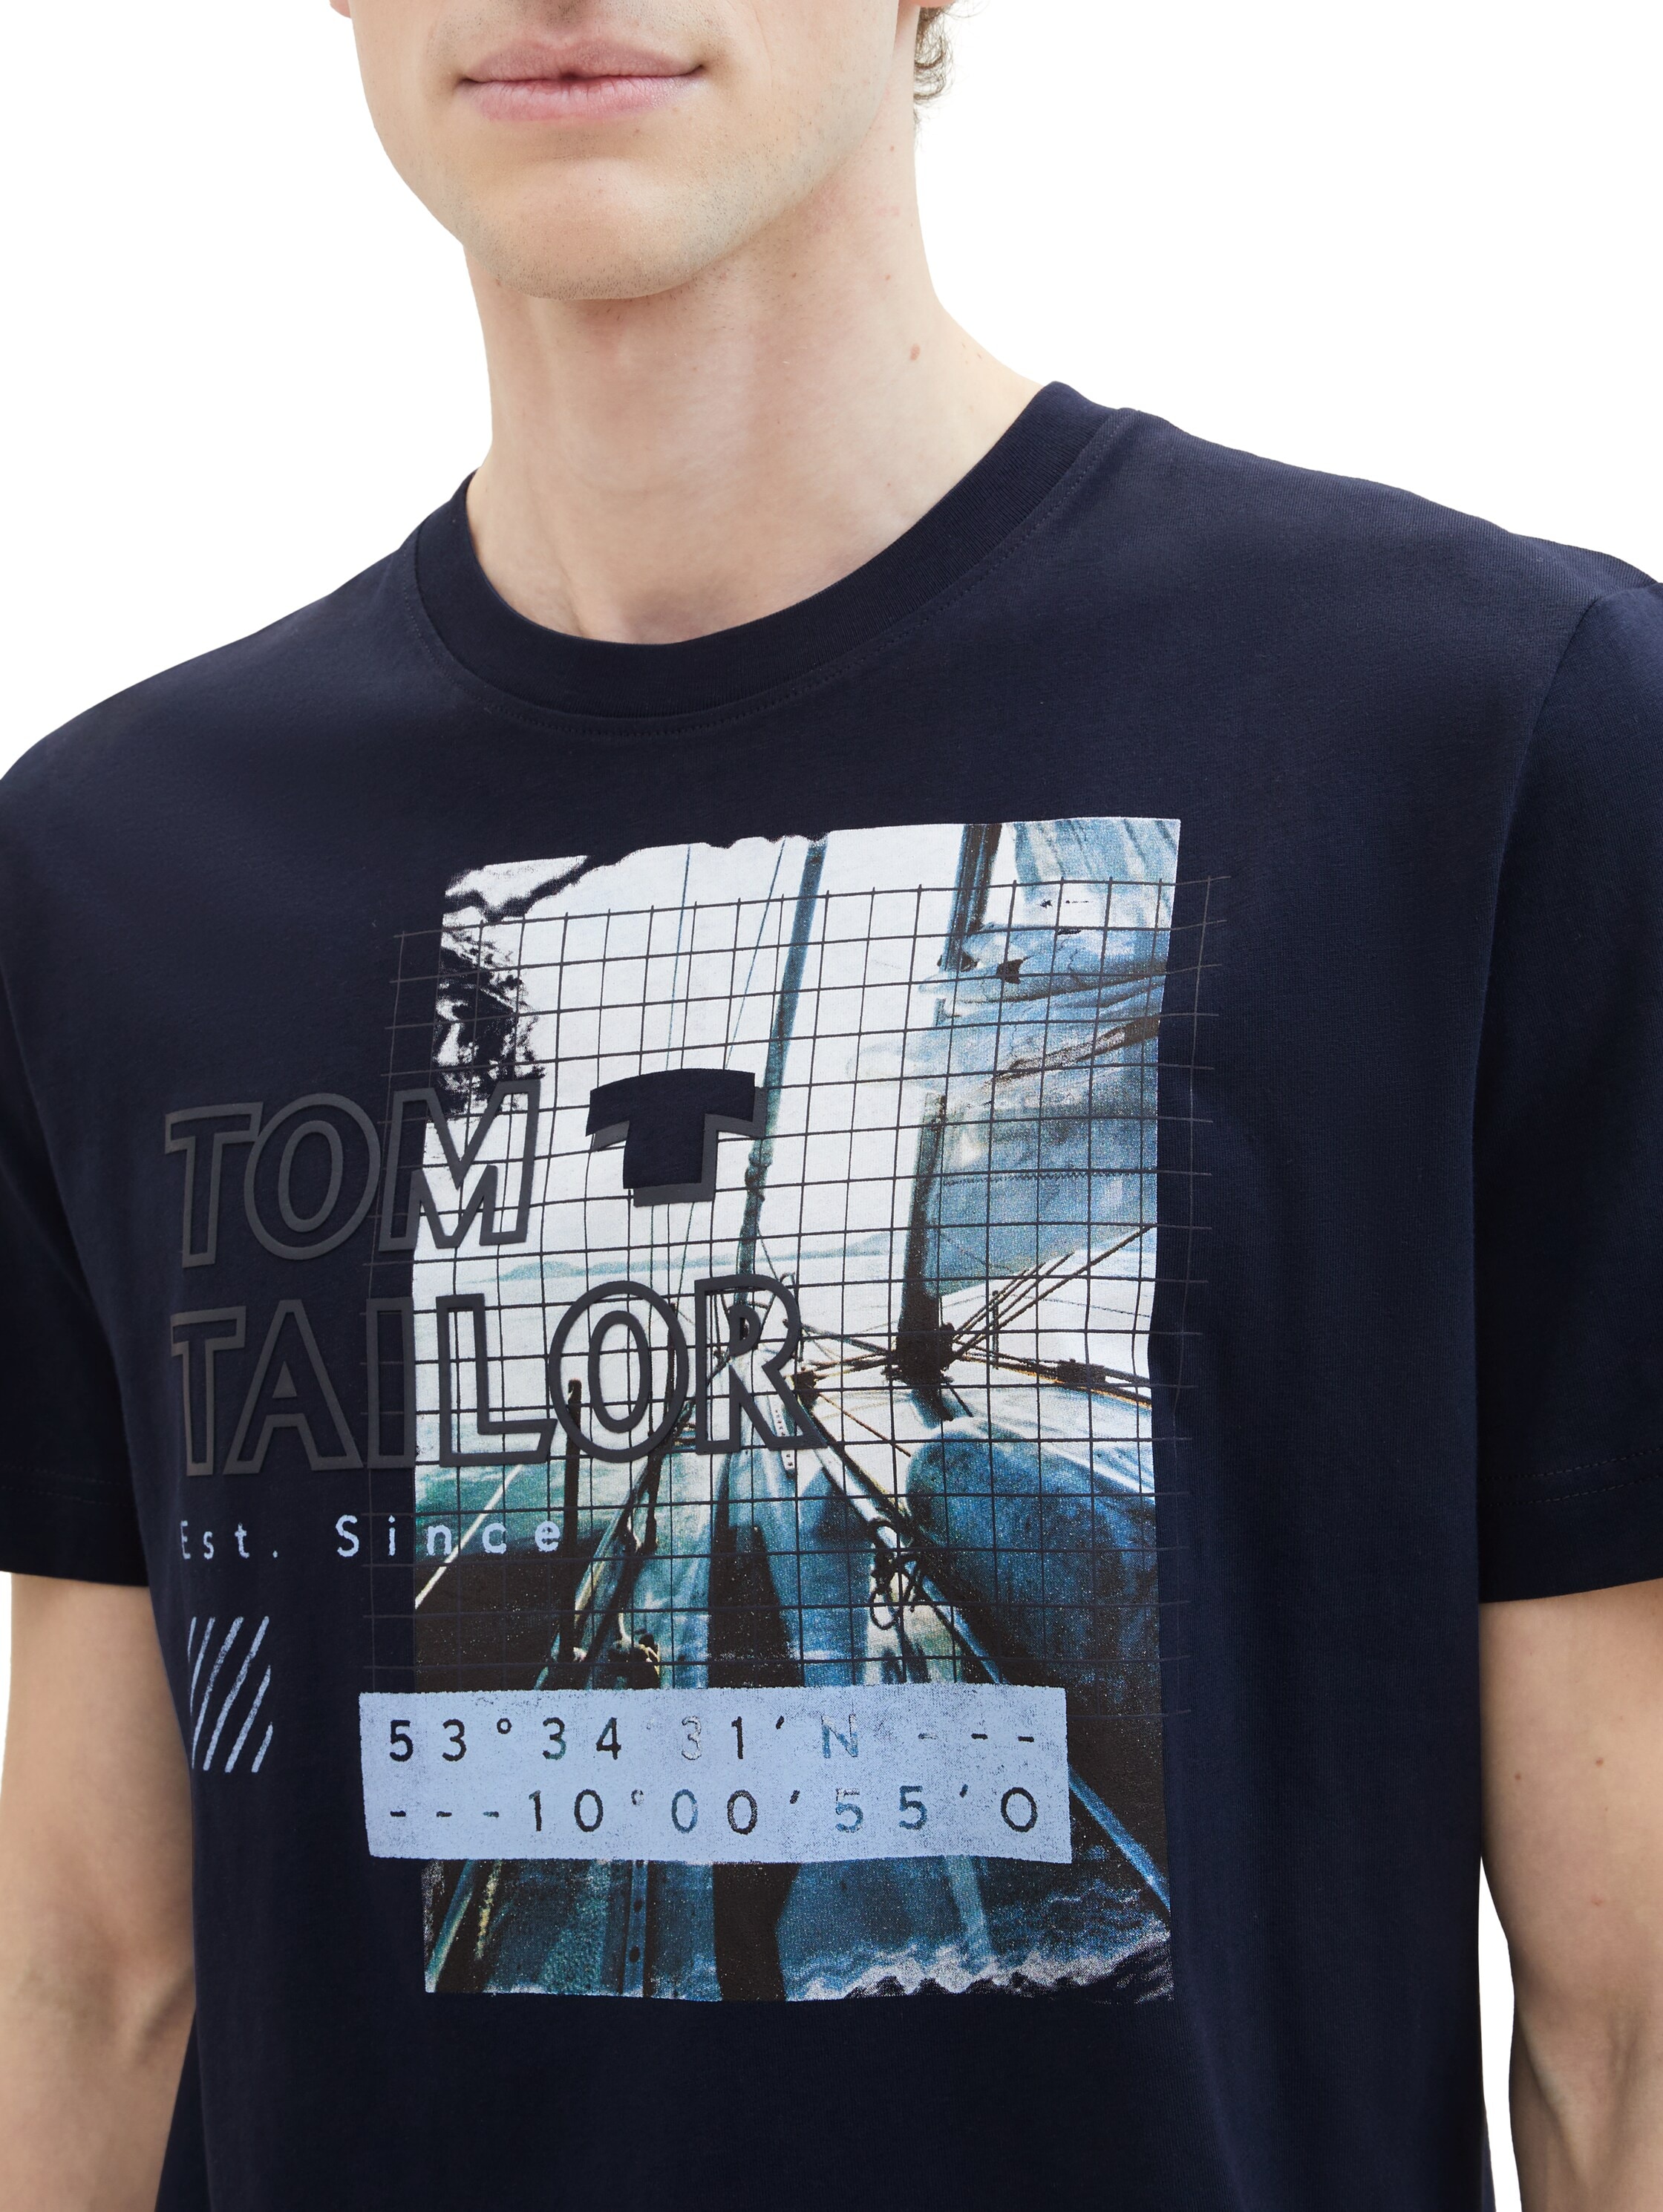 TOM TAILOR Print-Shirt, aus atmungsaktiver weicher Baumwolle